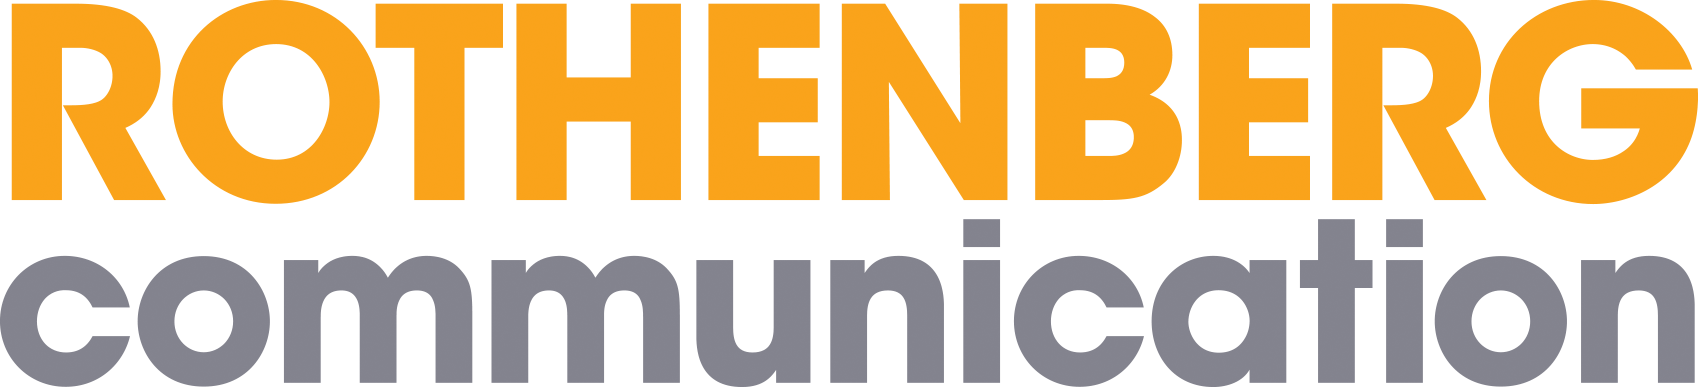 logo-rothenberg-communication1.png